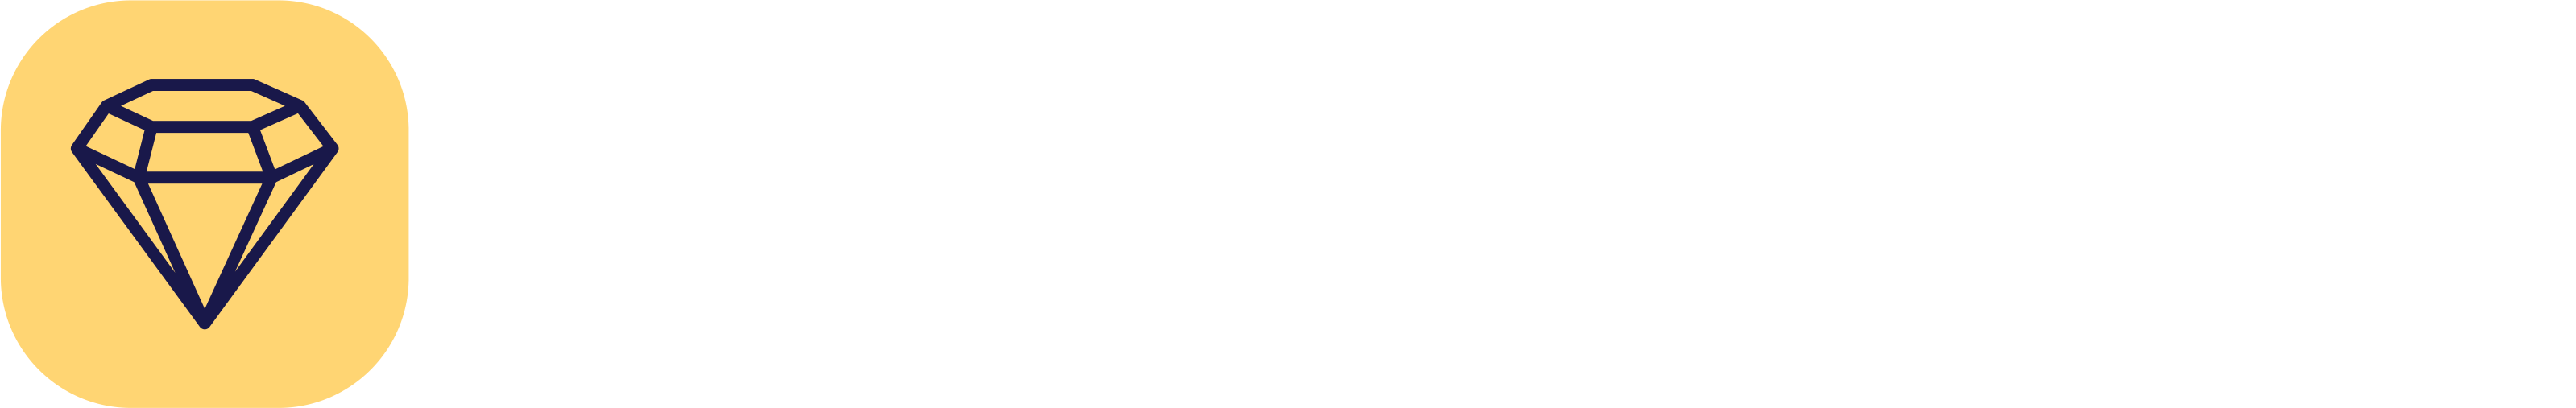 100x Cryptos Logo